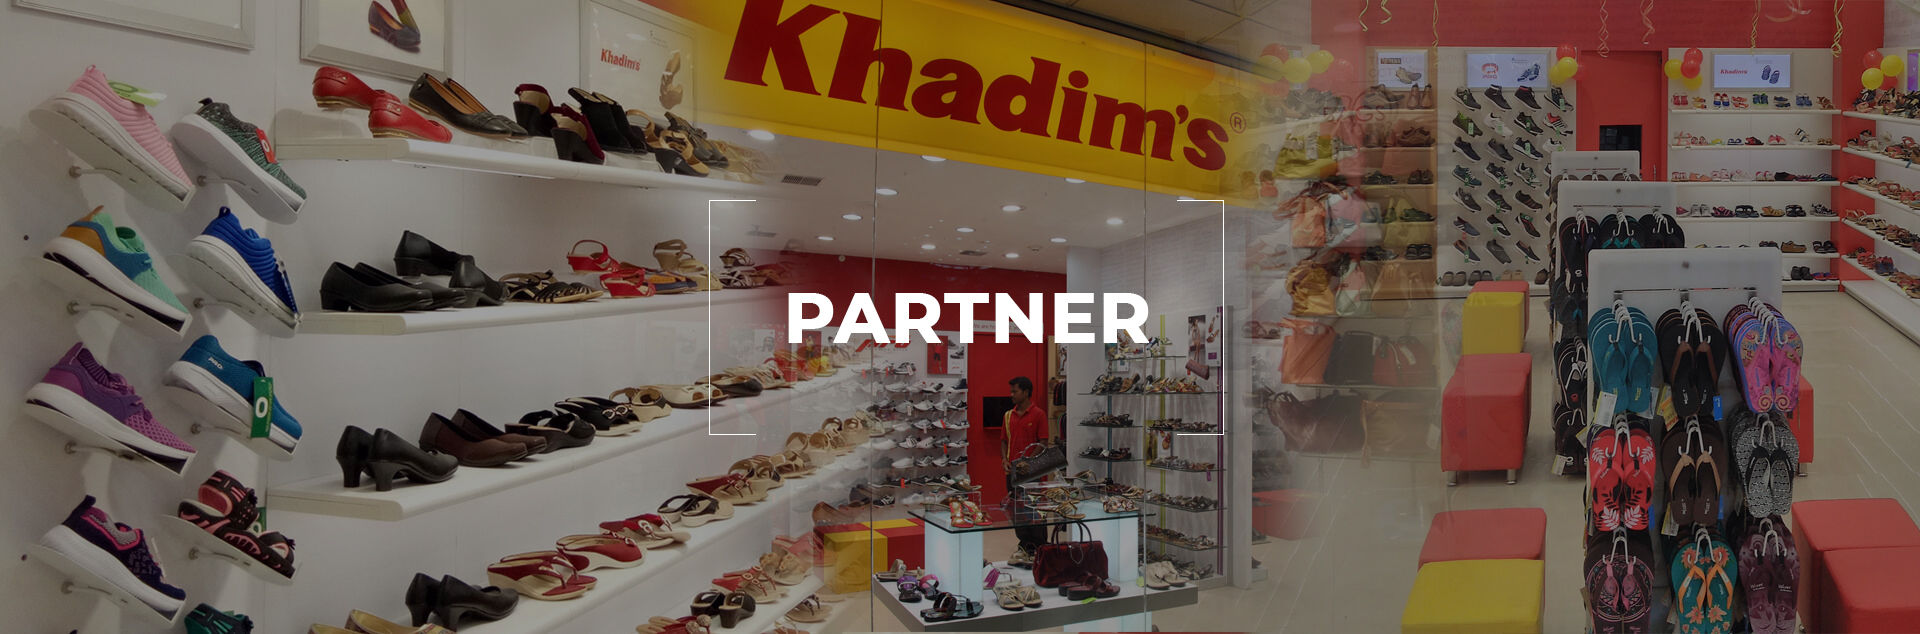 khadims online shopping